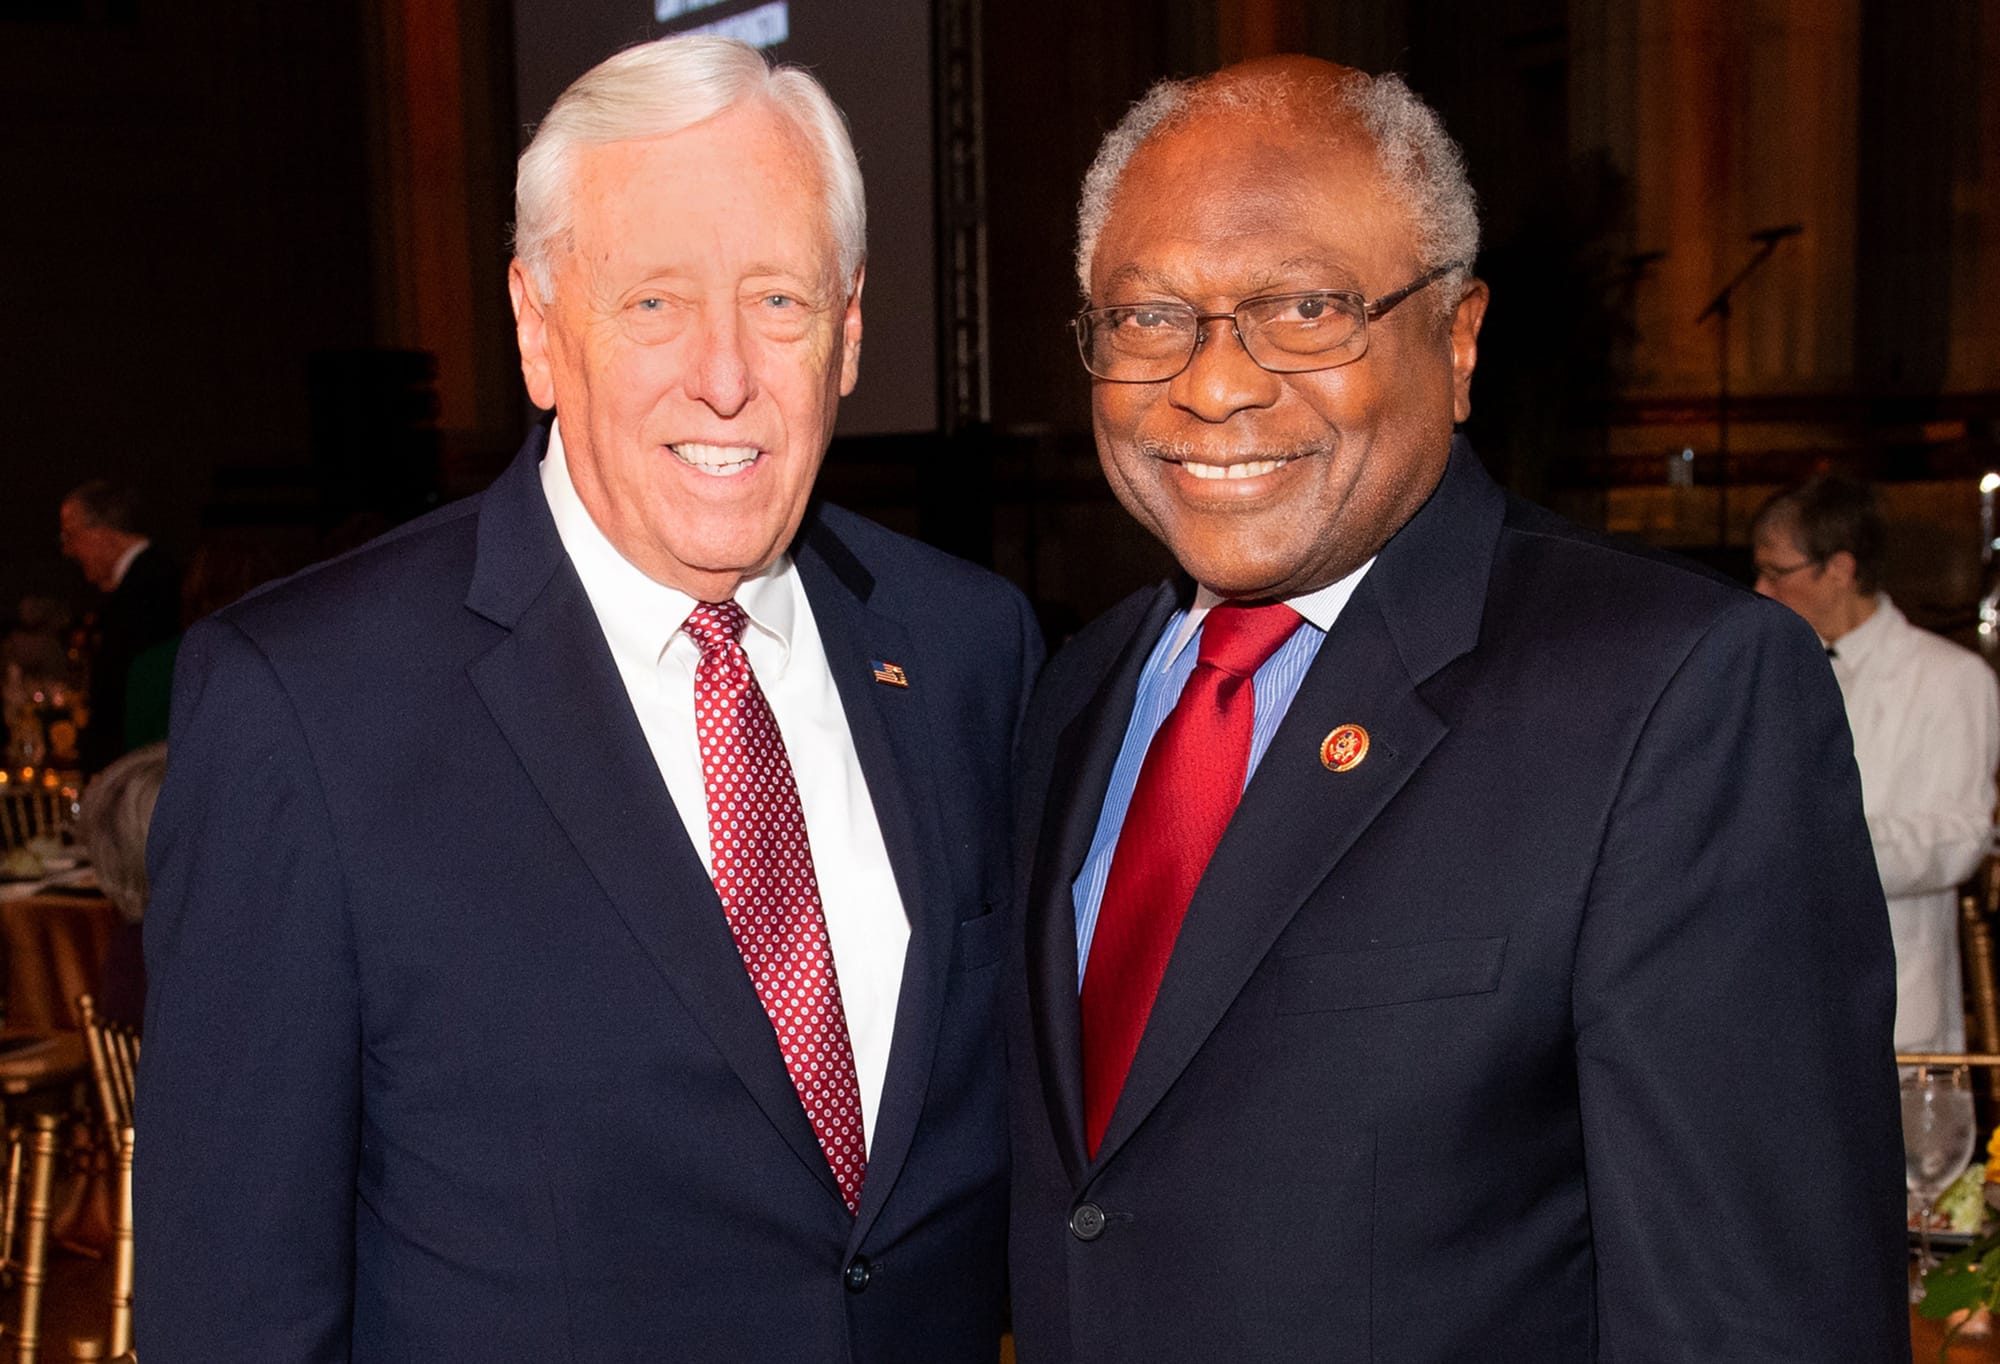 L-R: House Majority Leader Steny Hoyer and Congressman James Clyburn. LBJ Foundation photo by Daniel Swartz, 2019.